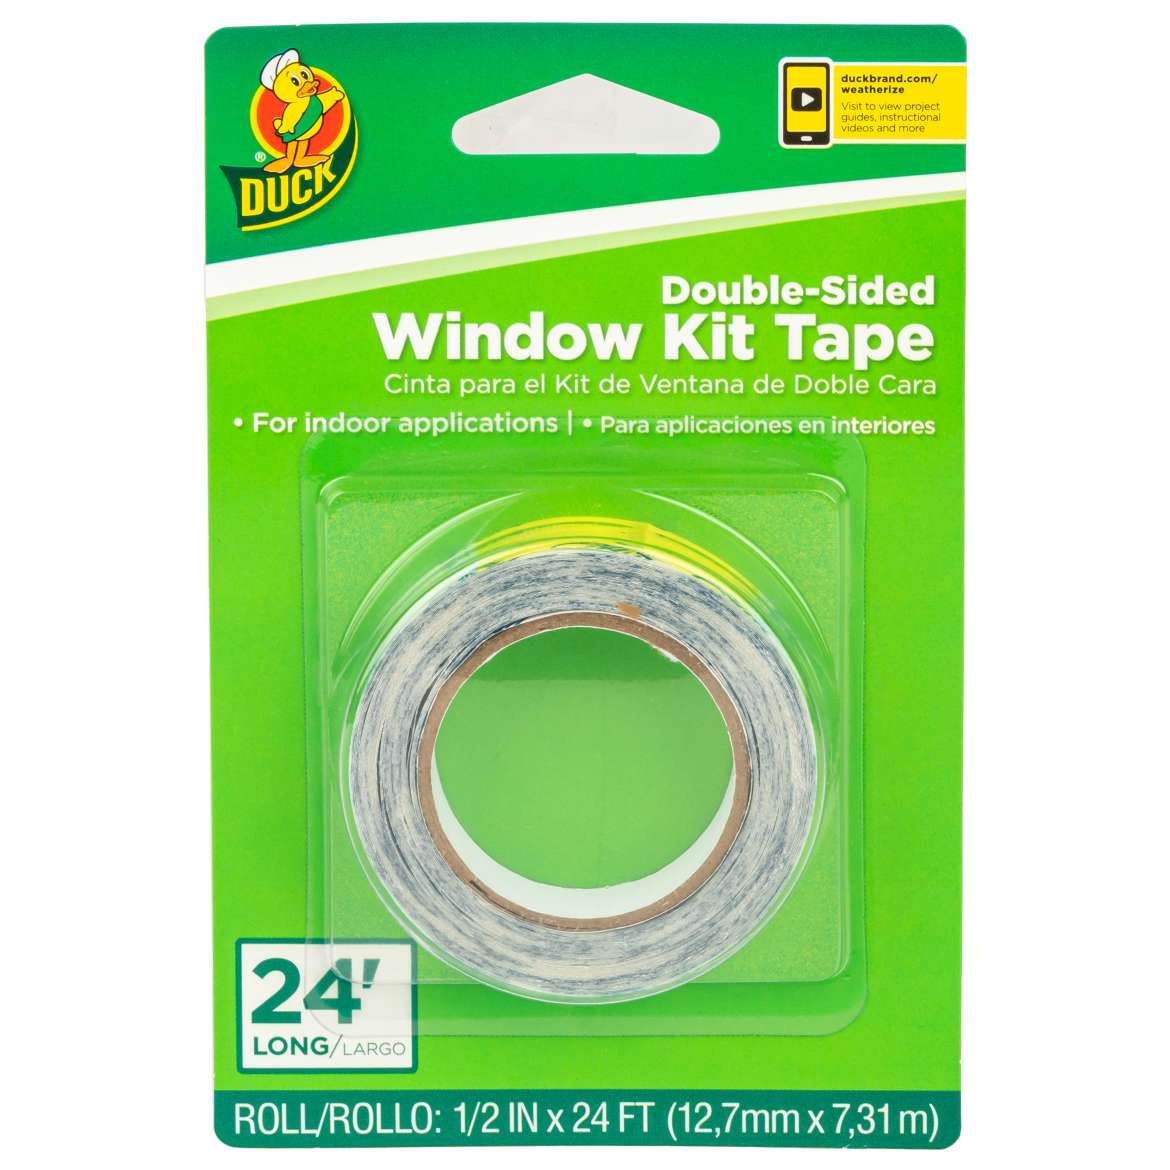 Double-Sided Window Kit Tape Image